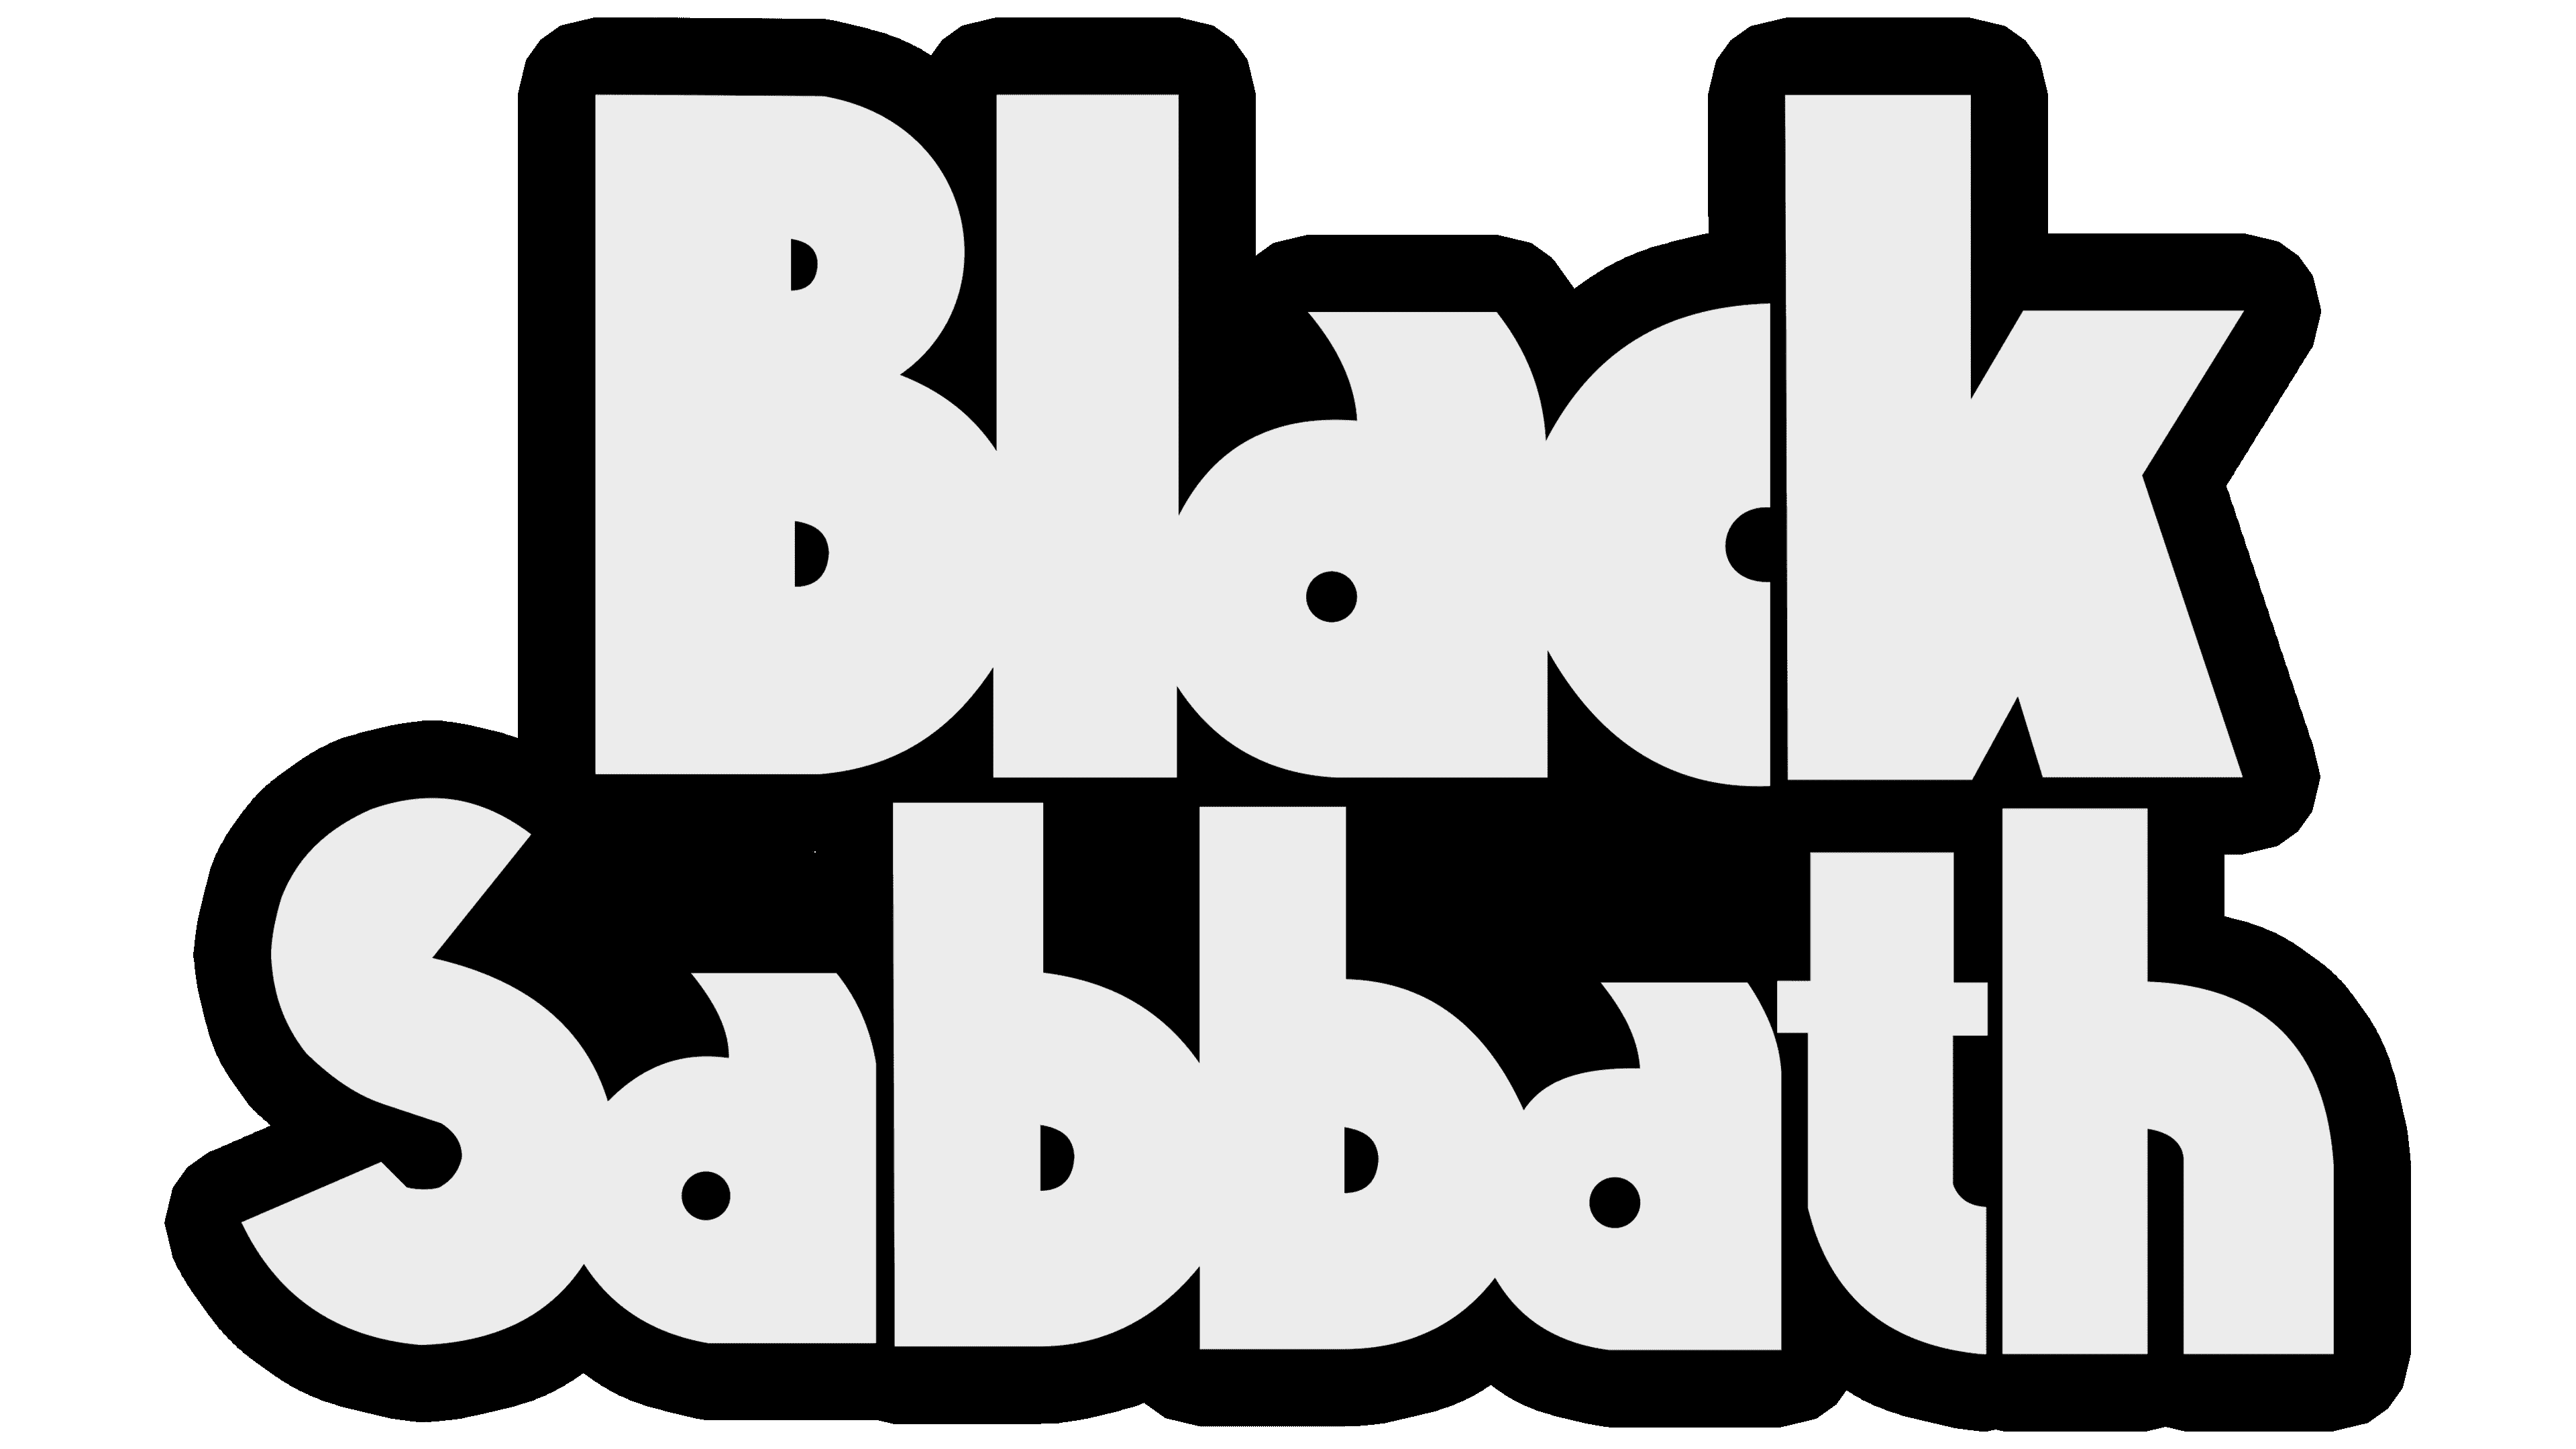 black sabbath logo house targaryen sigil